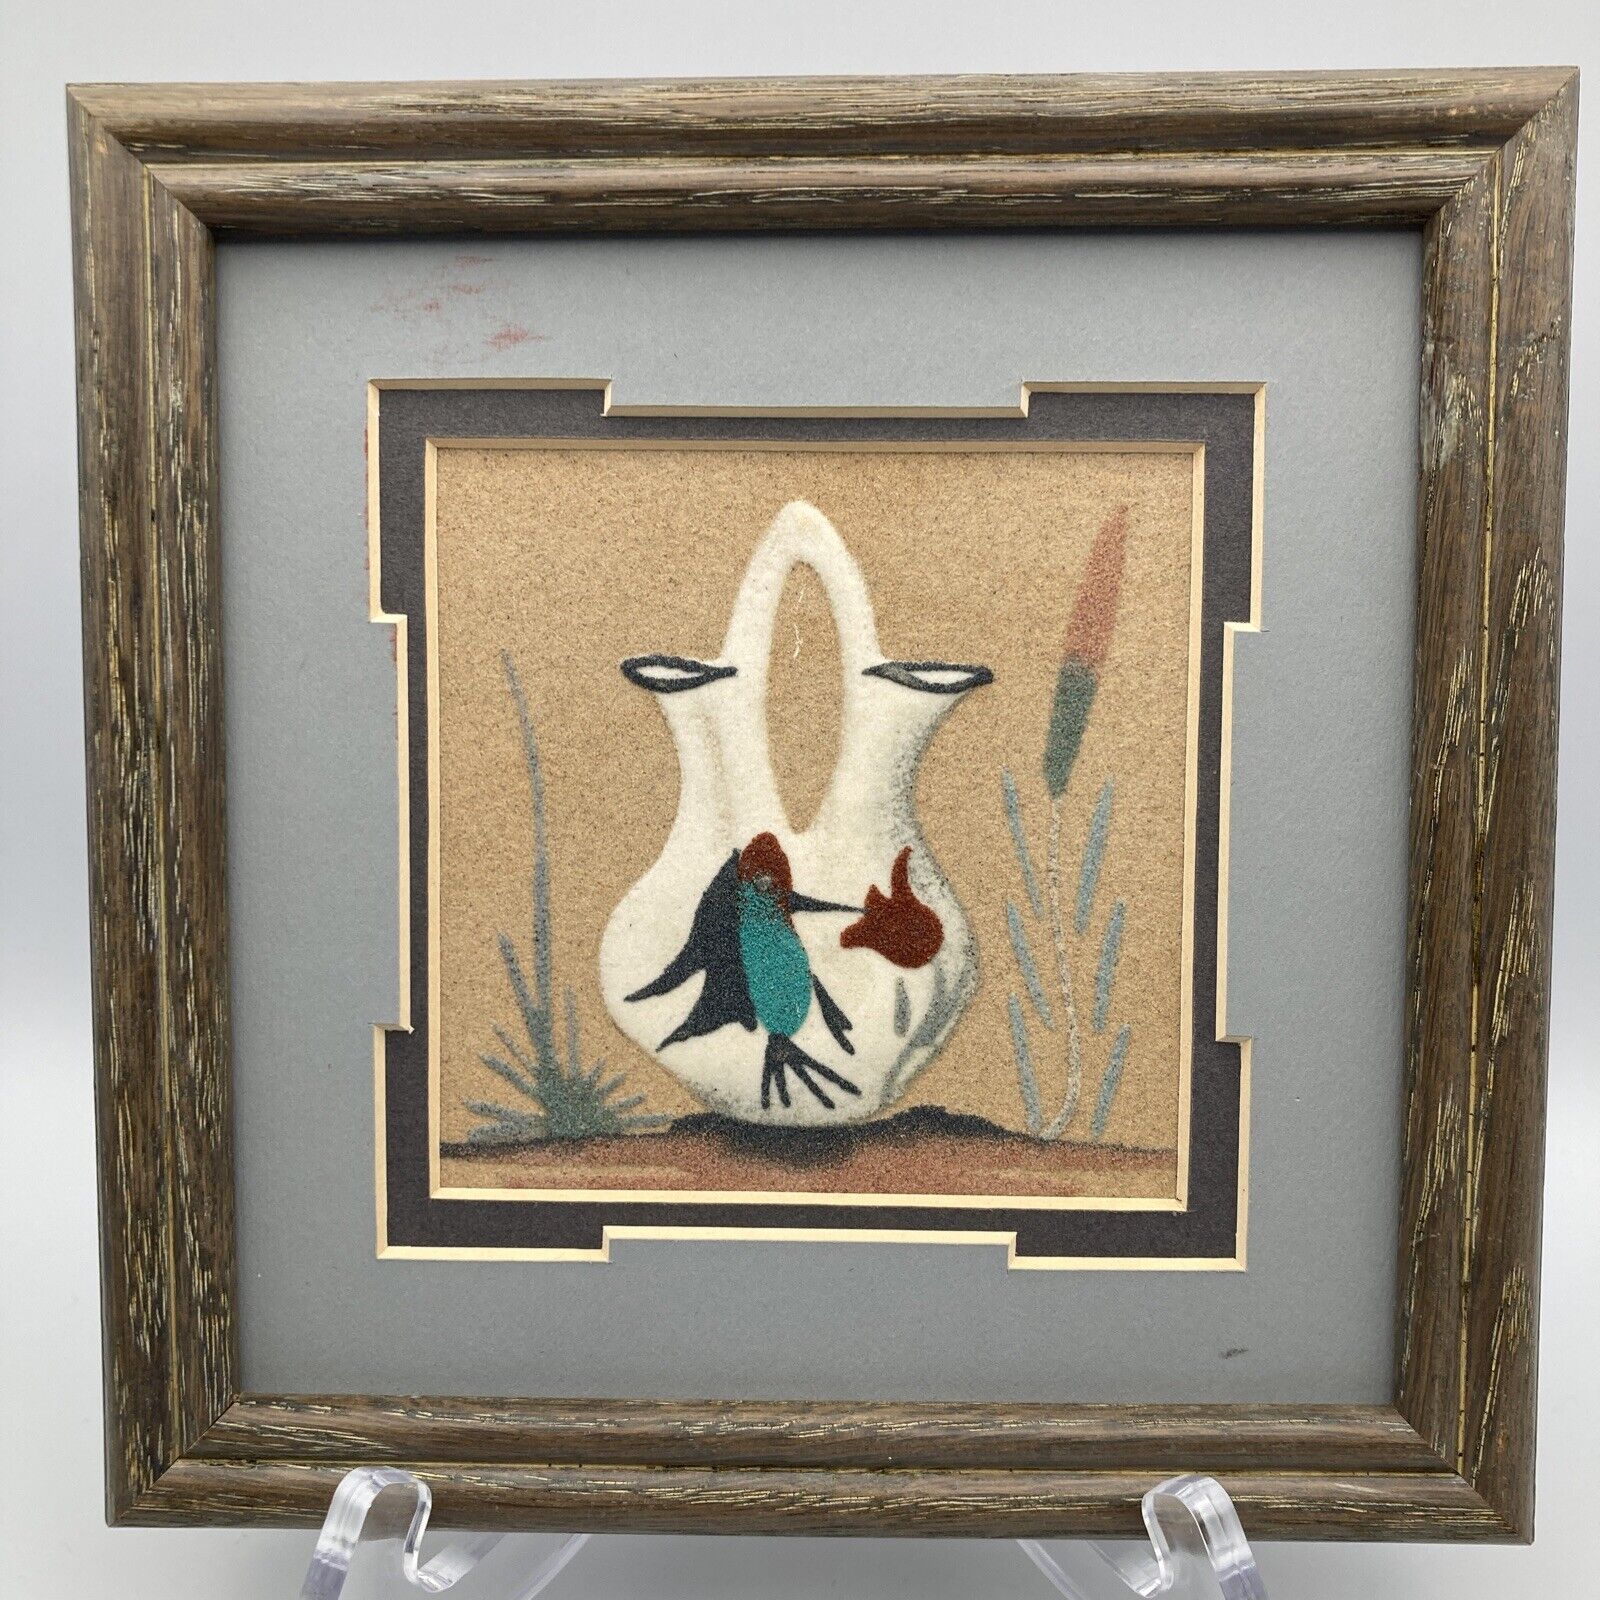 Navajo Healing Sand Art Wedding Vase Signed A. Johnson Framed 7”x 7”